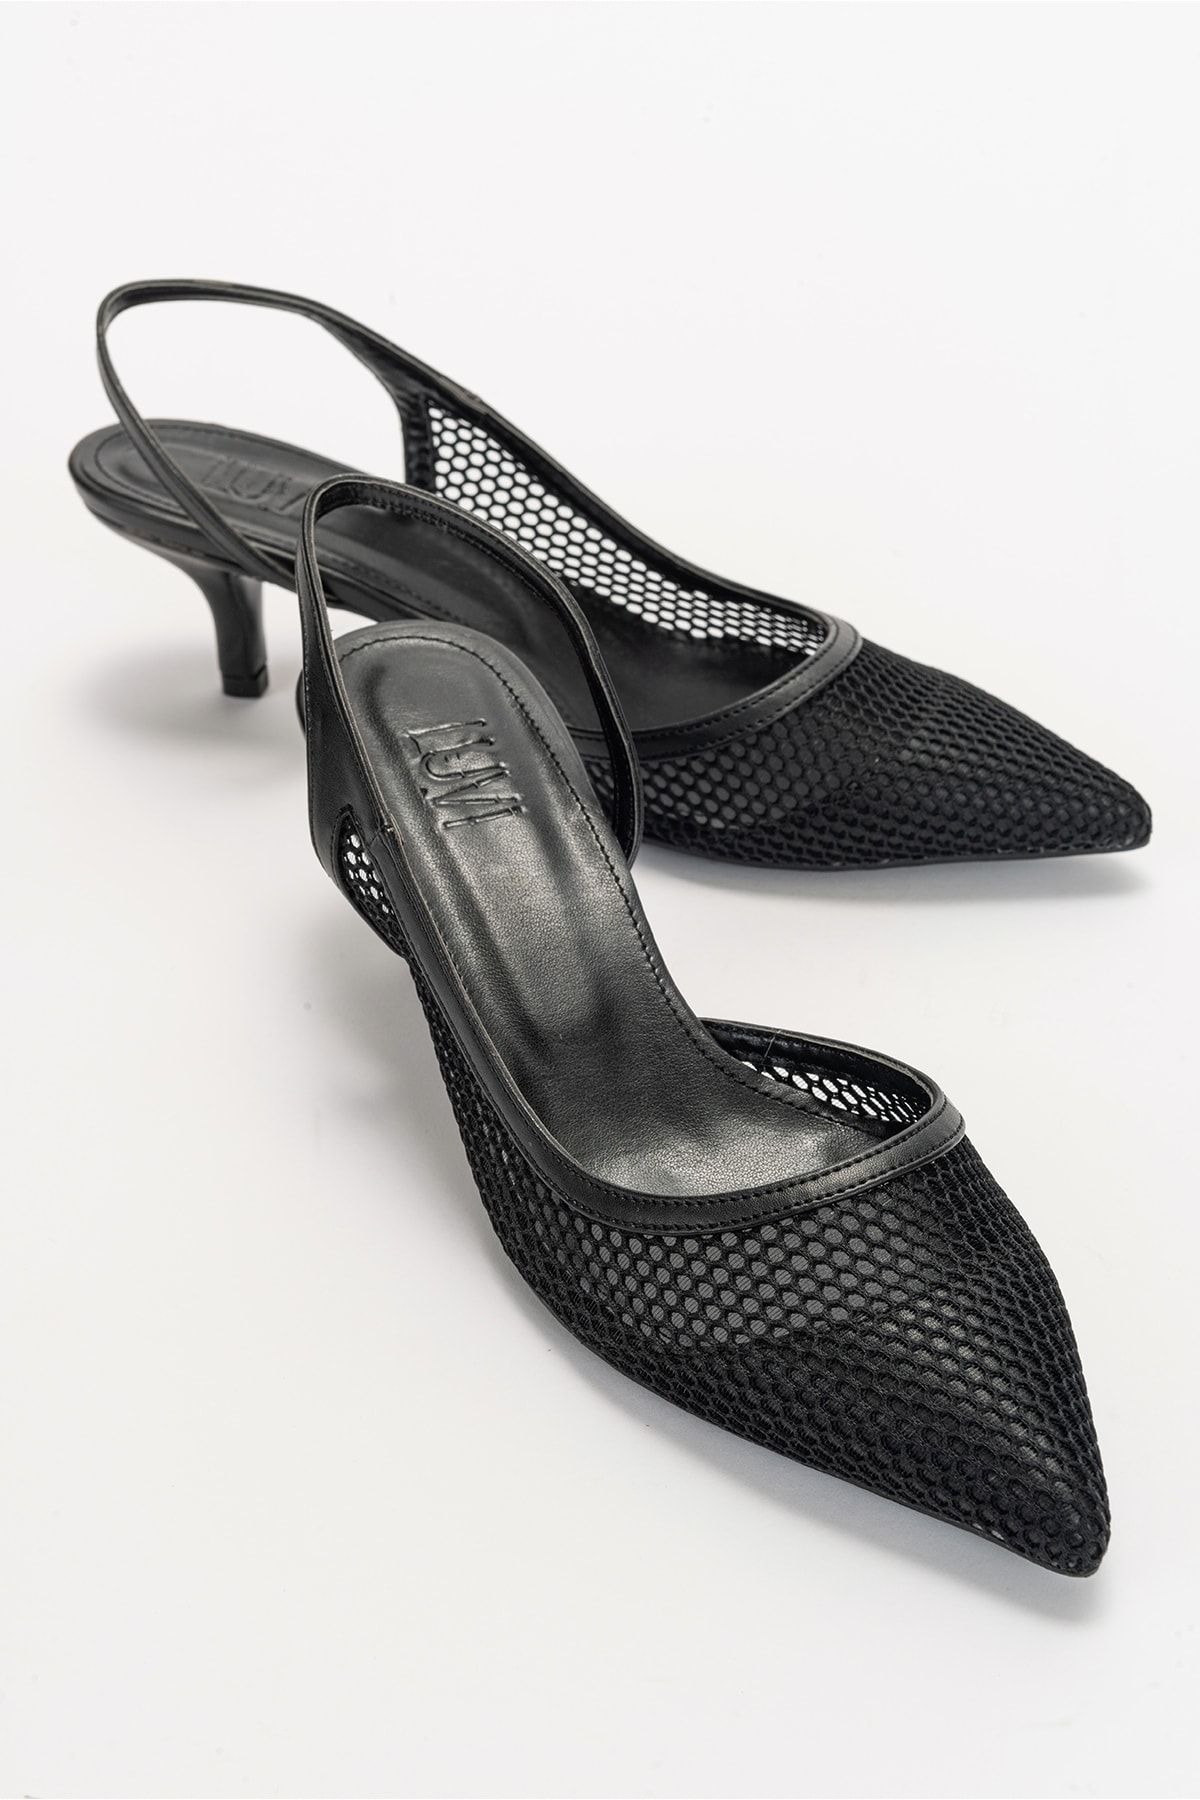 luvishoes Hazy Siyah Kadın Topuklu Ayakkabı